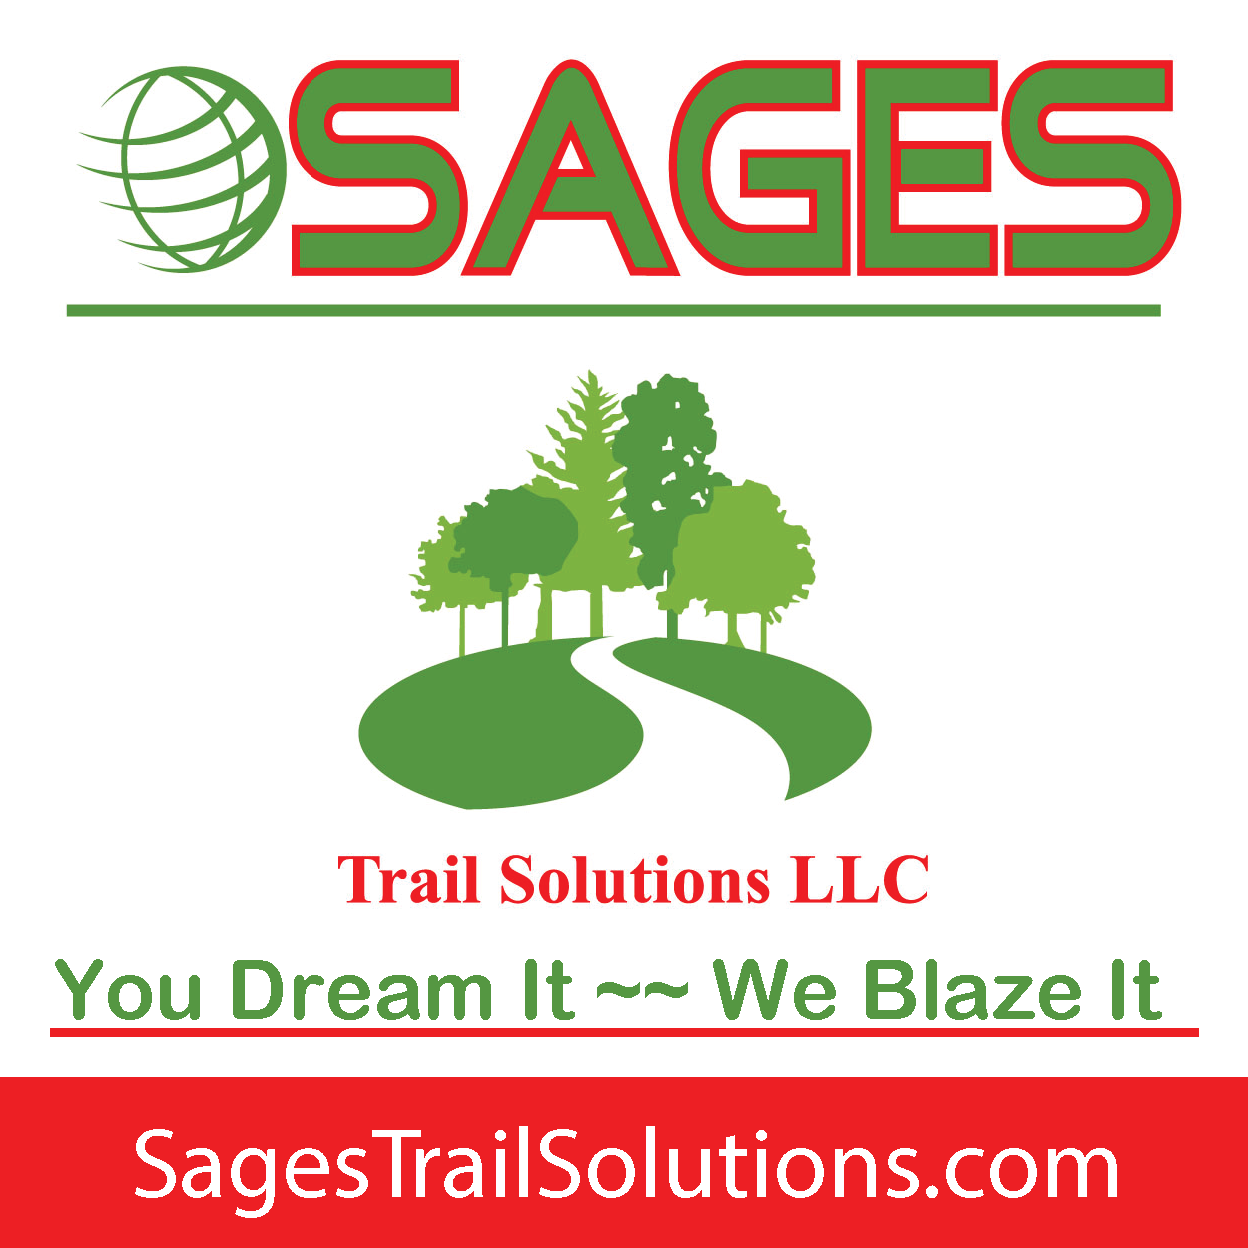 Sages Trail Solutions LLC LOGO.png